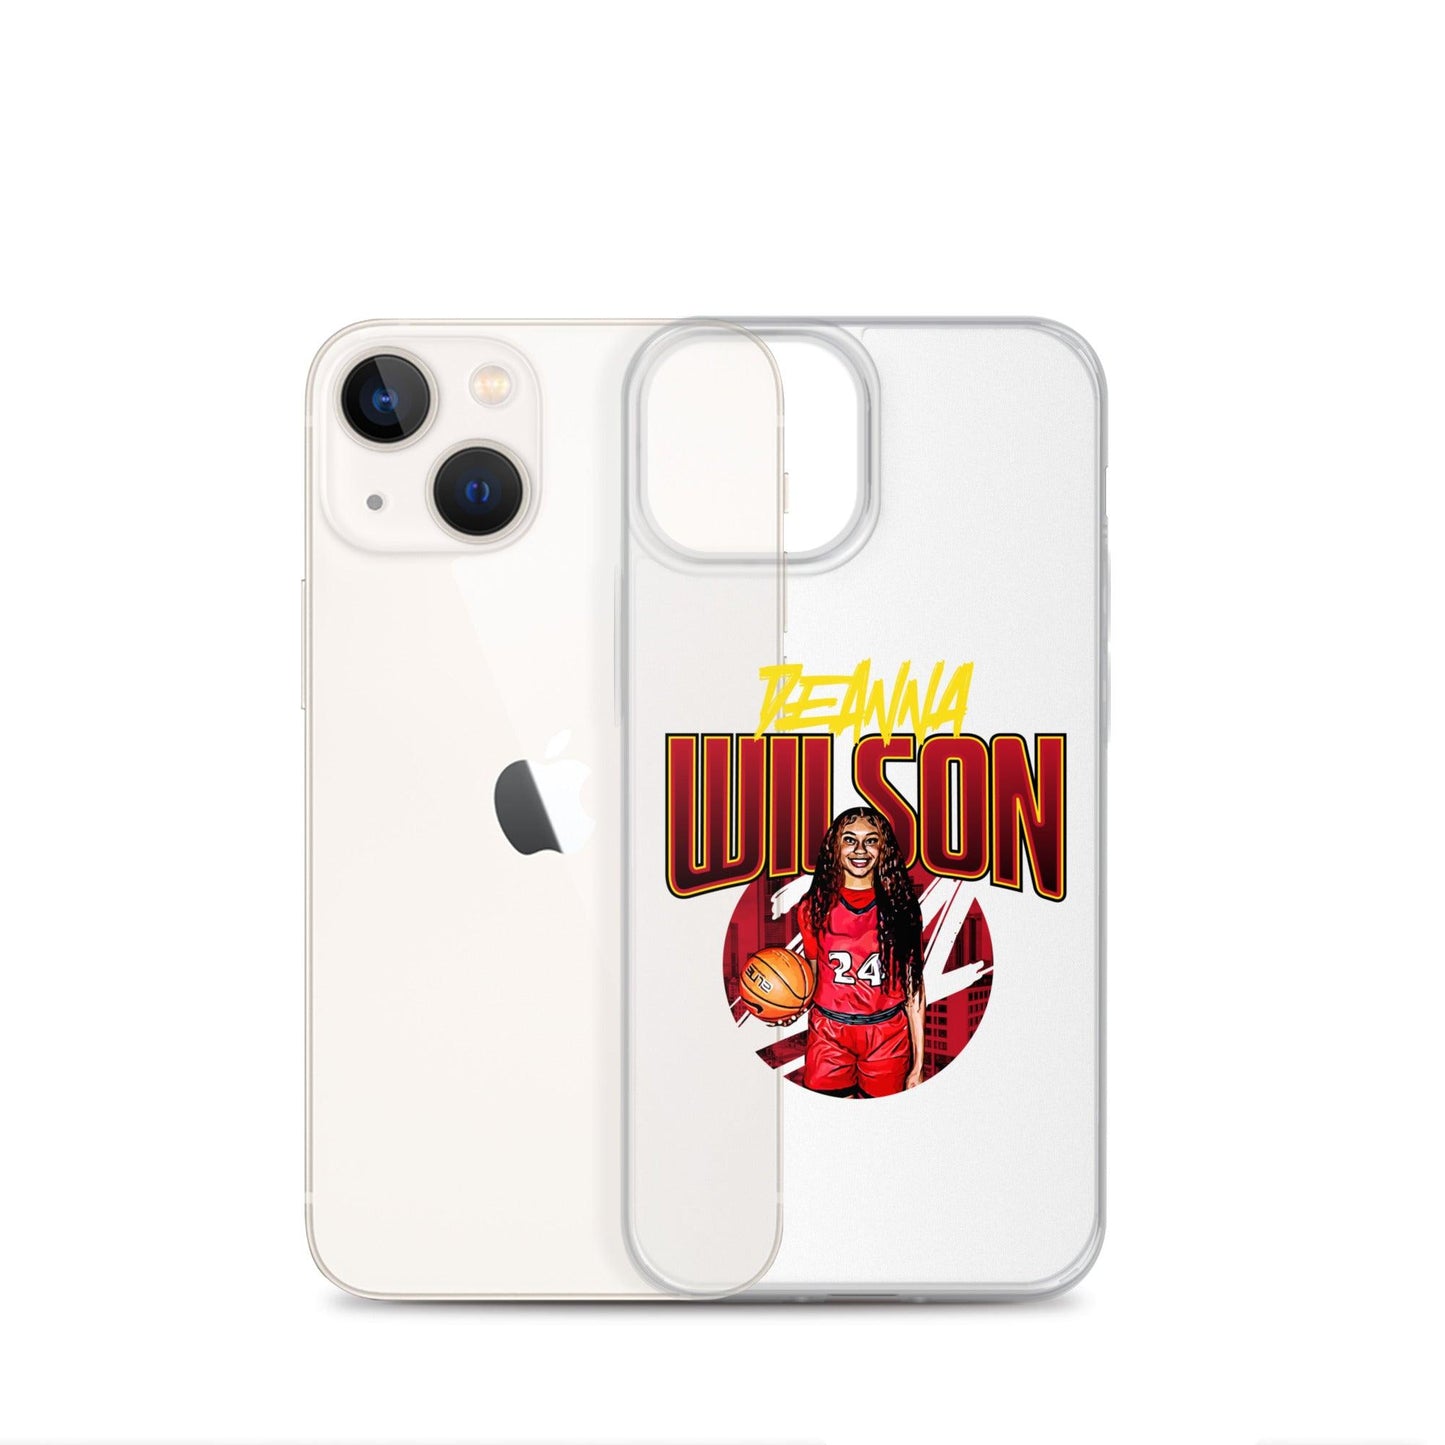 DeAnna Wilson "Gameday" iPhone Case - Fan Arch